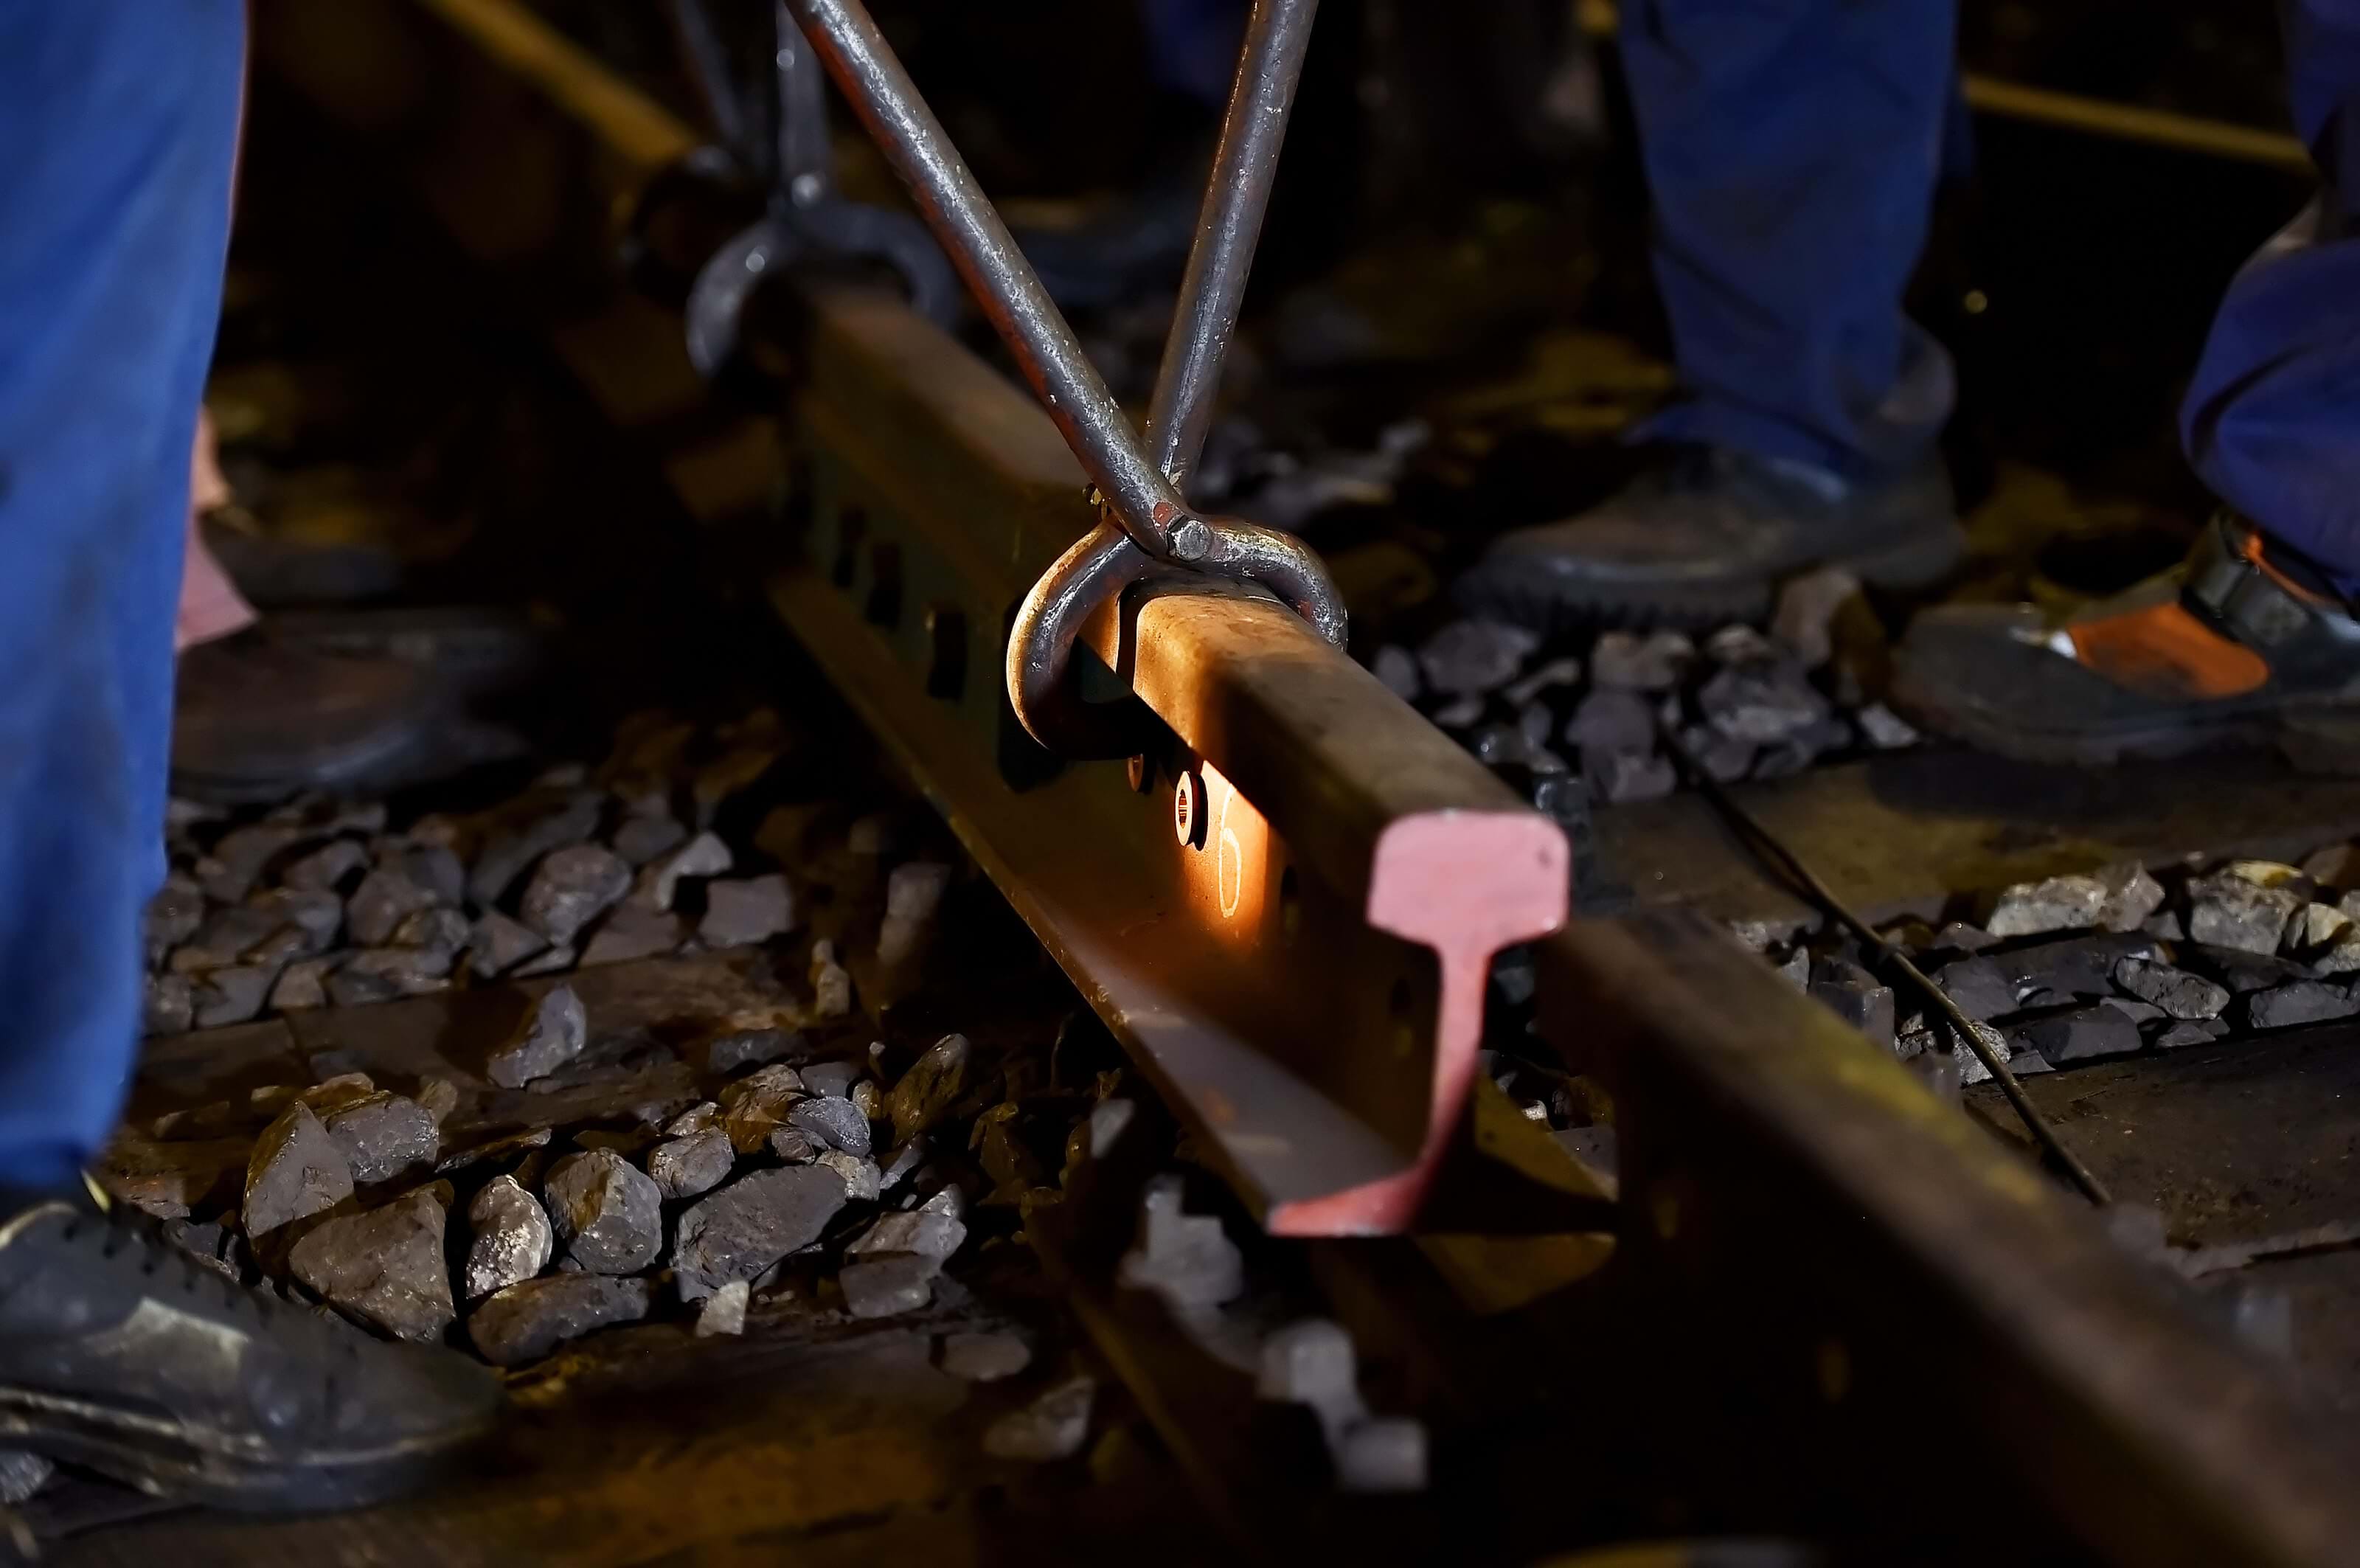 Railway workers work on tracks